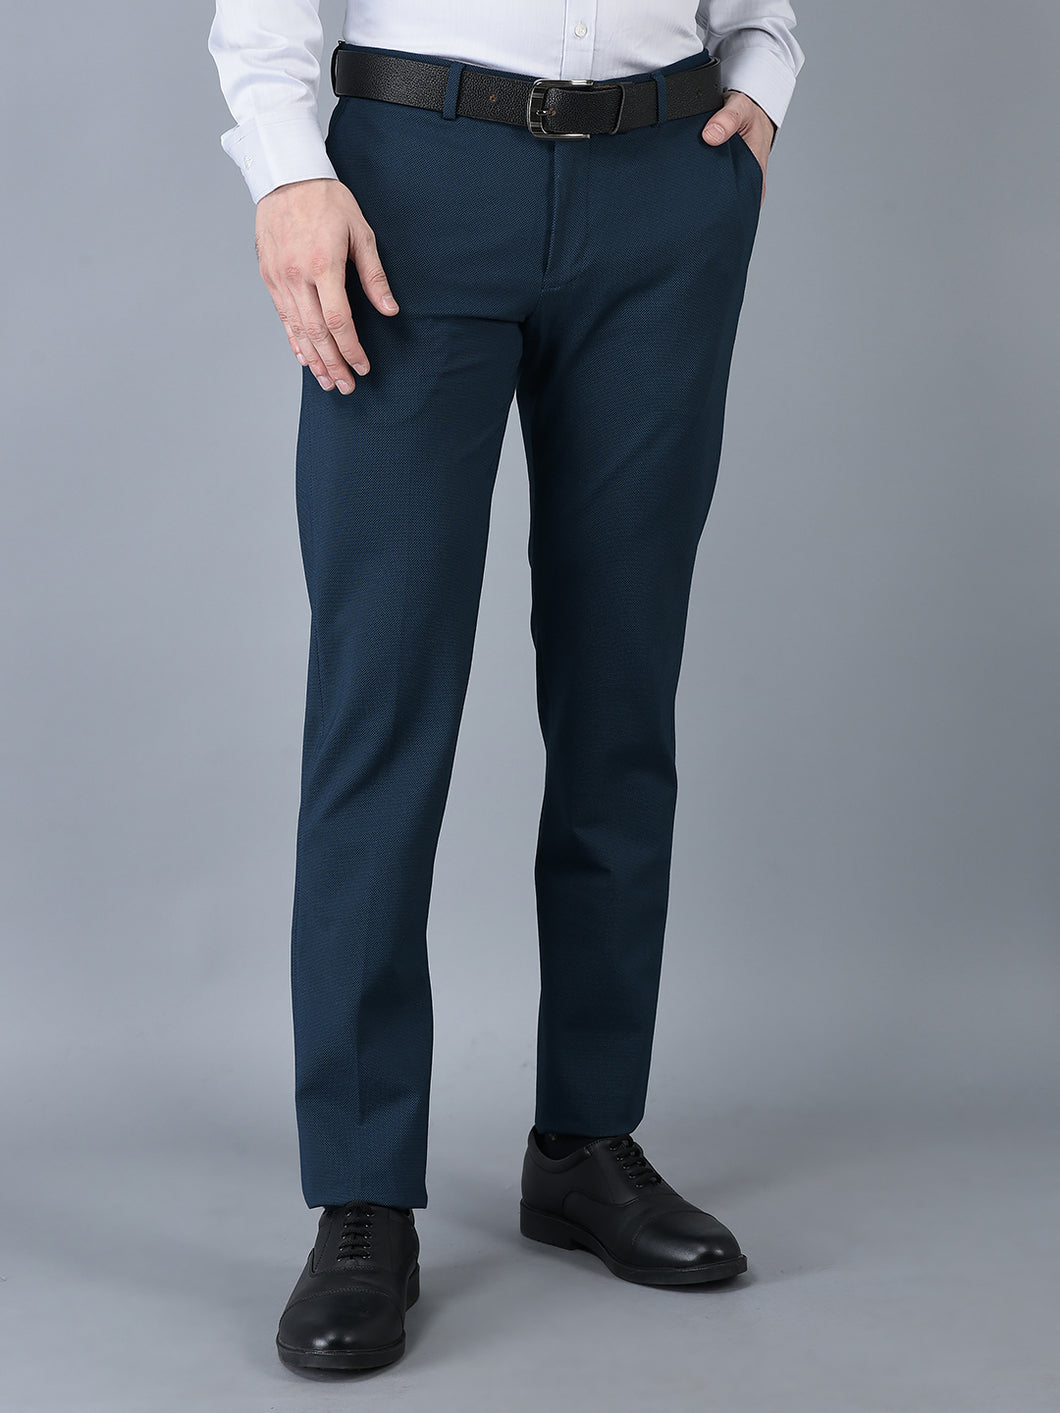 CANOE MEN Formal Trouser  Two Front Pocket And Two Back Pocket